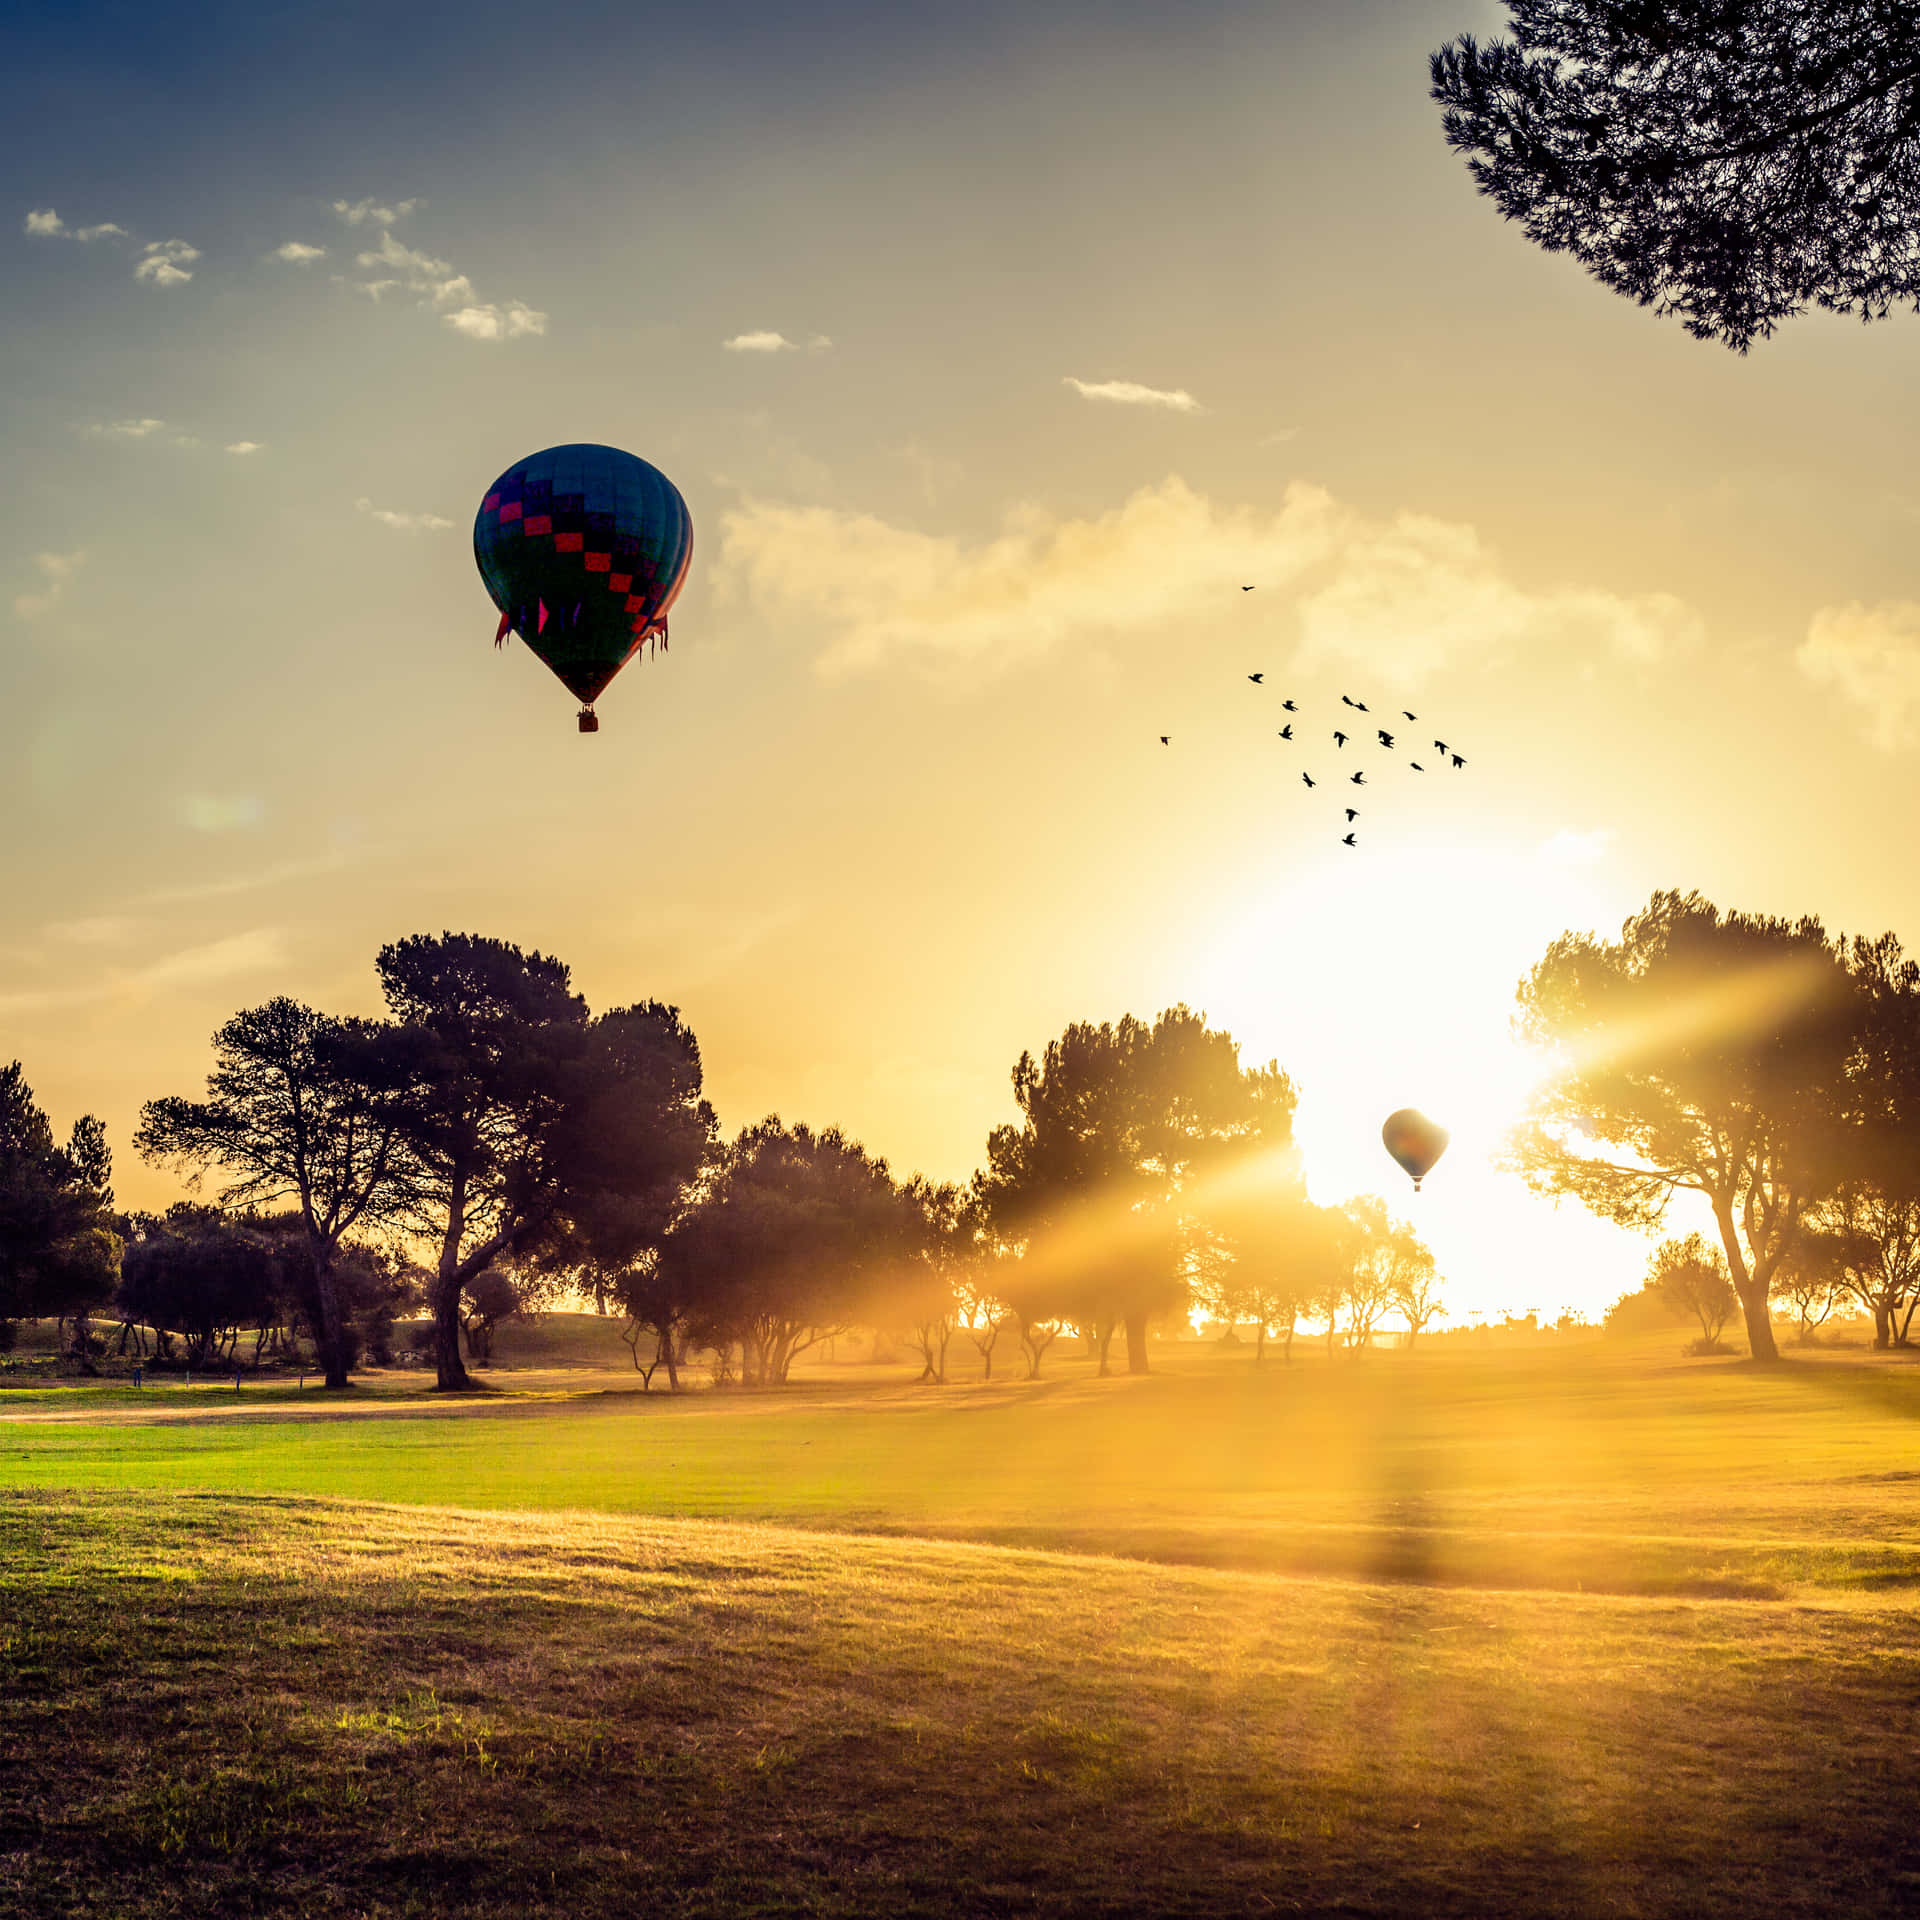 A beautiful hot air balloon drifting through the picturesque landscape